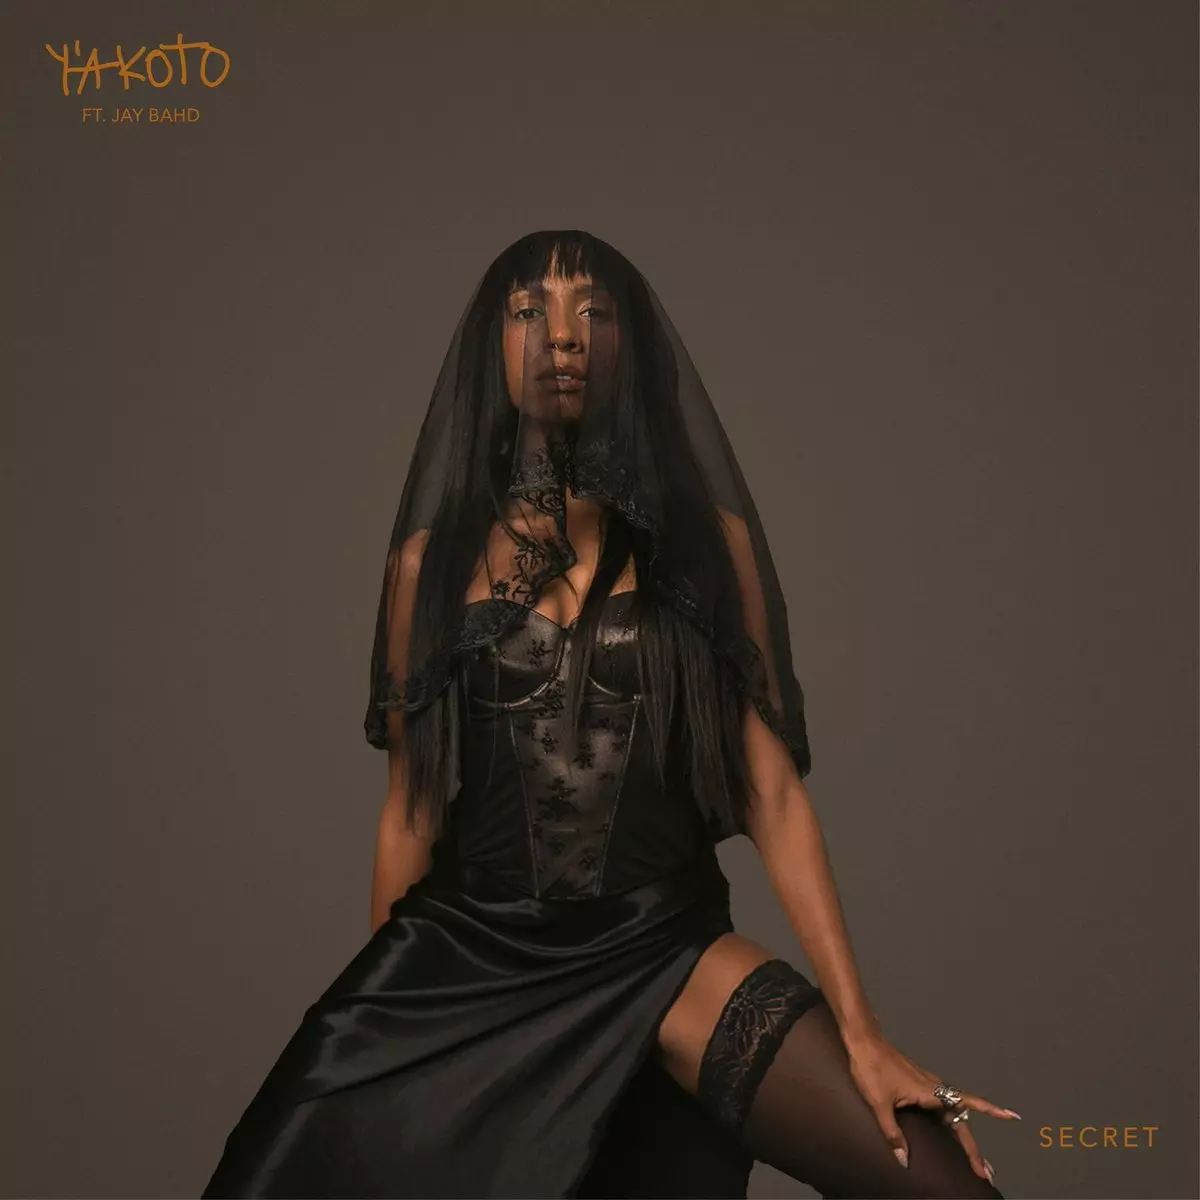 Y'akoto - Secret Ft. Jay Bahd | MP3 Download - OneClickGhana